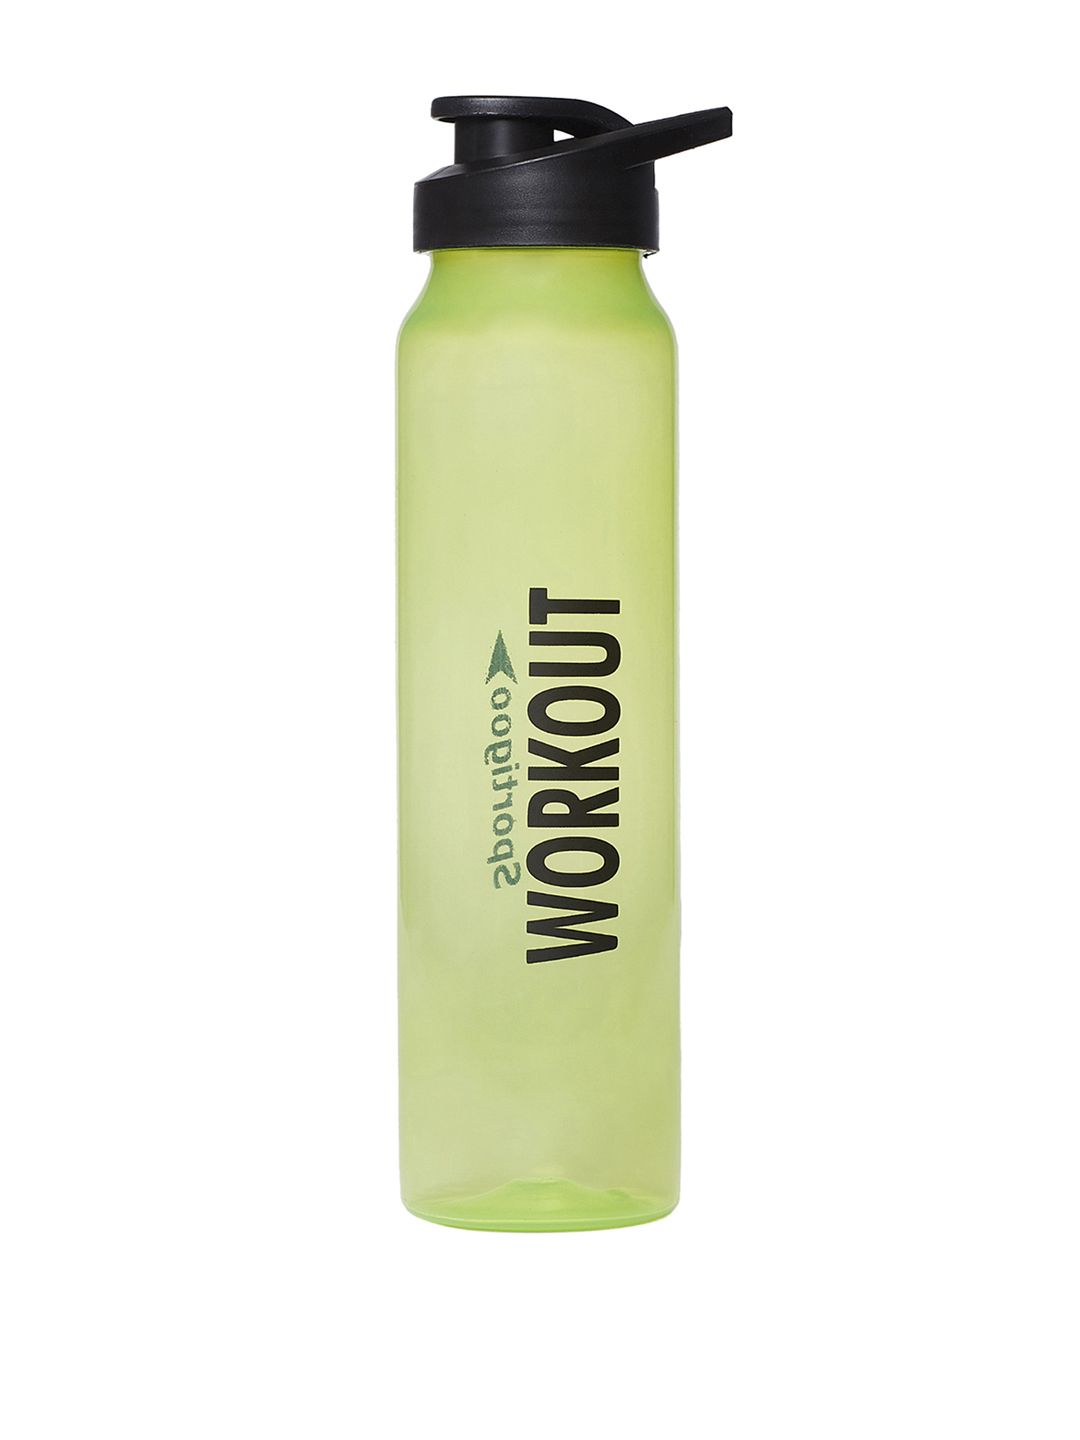 Sportigoo Unisex Green & Black PRO-Z Translucent Water Bottle 1 Litre Price in India